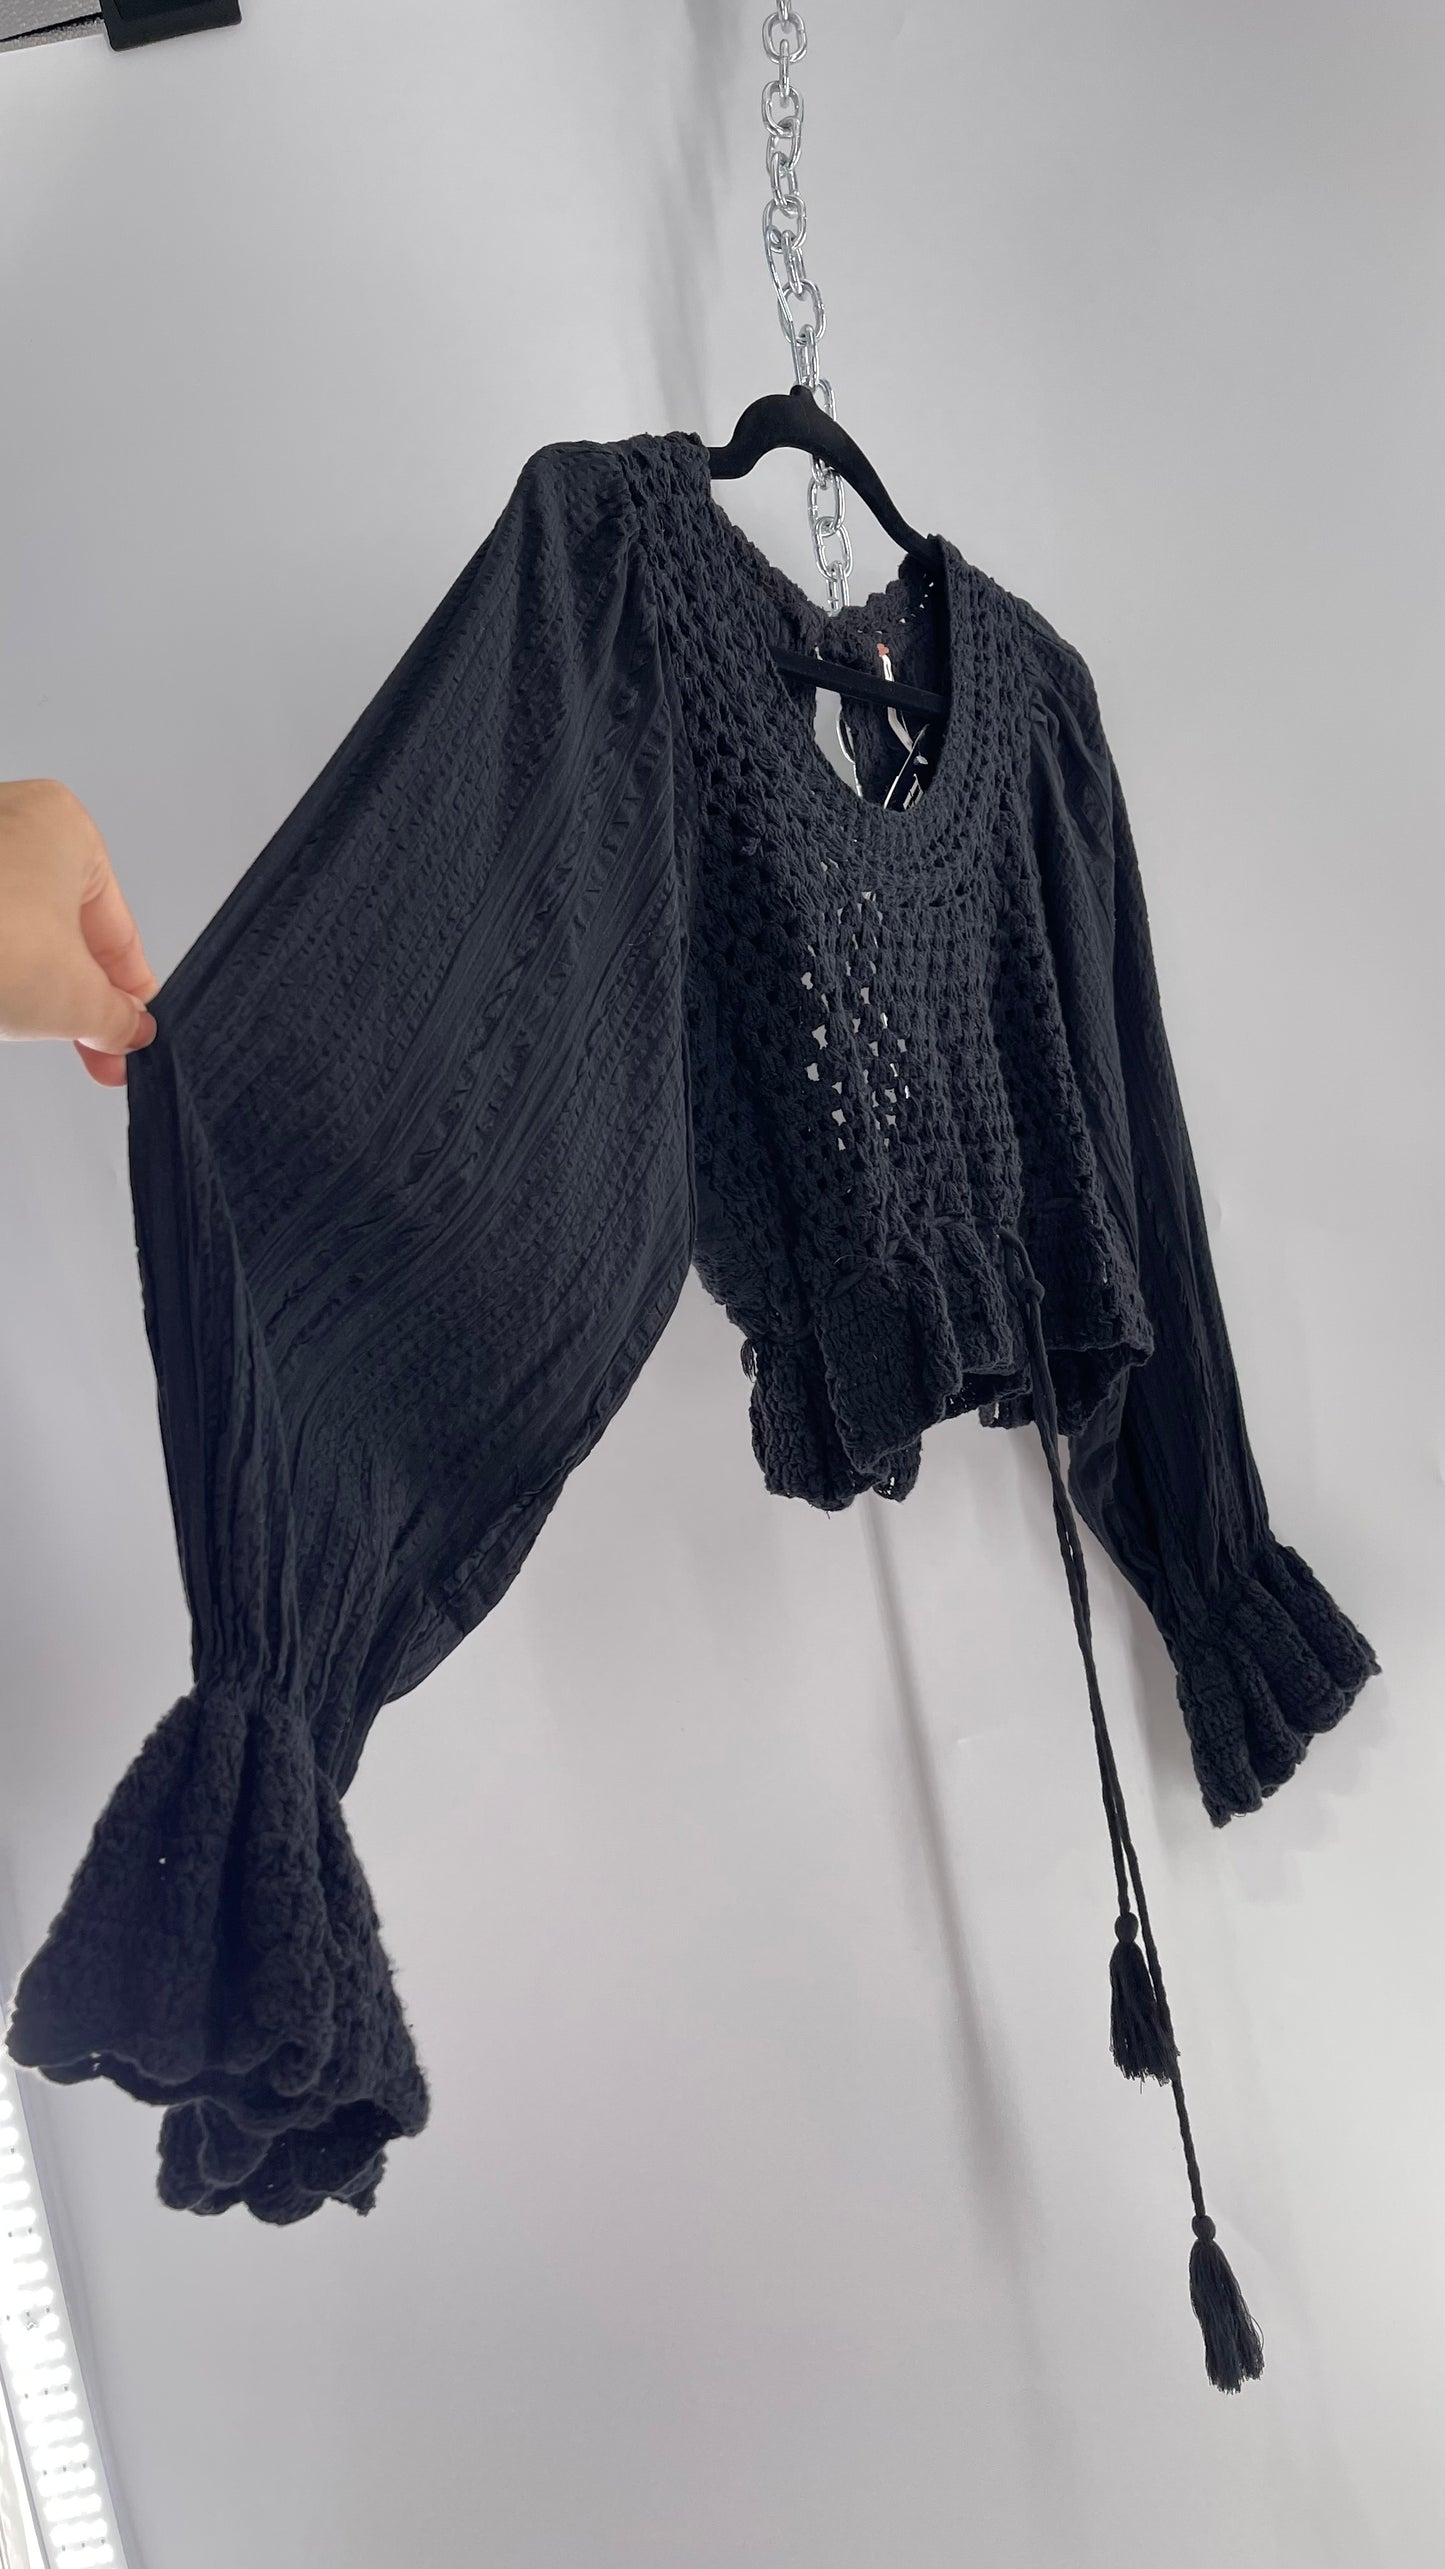 Free People Black Crochet “Megan” Top (XS)